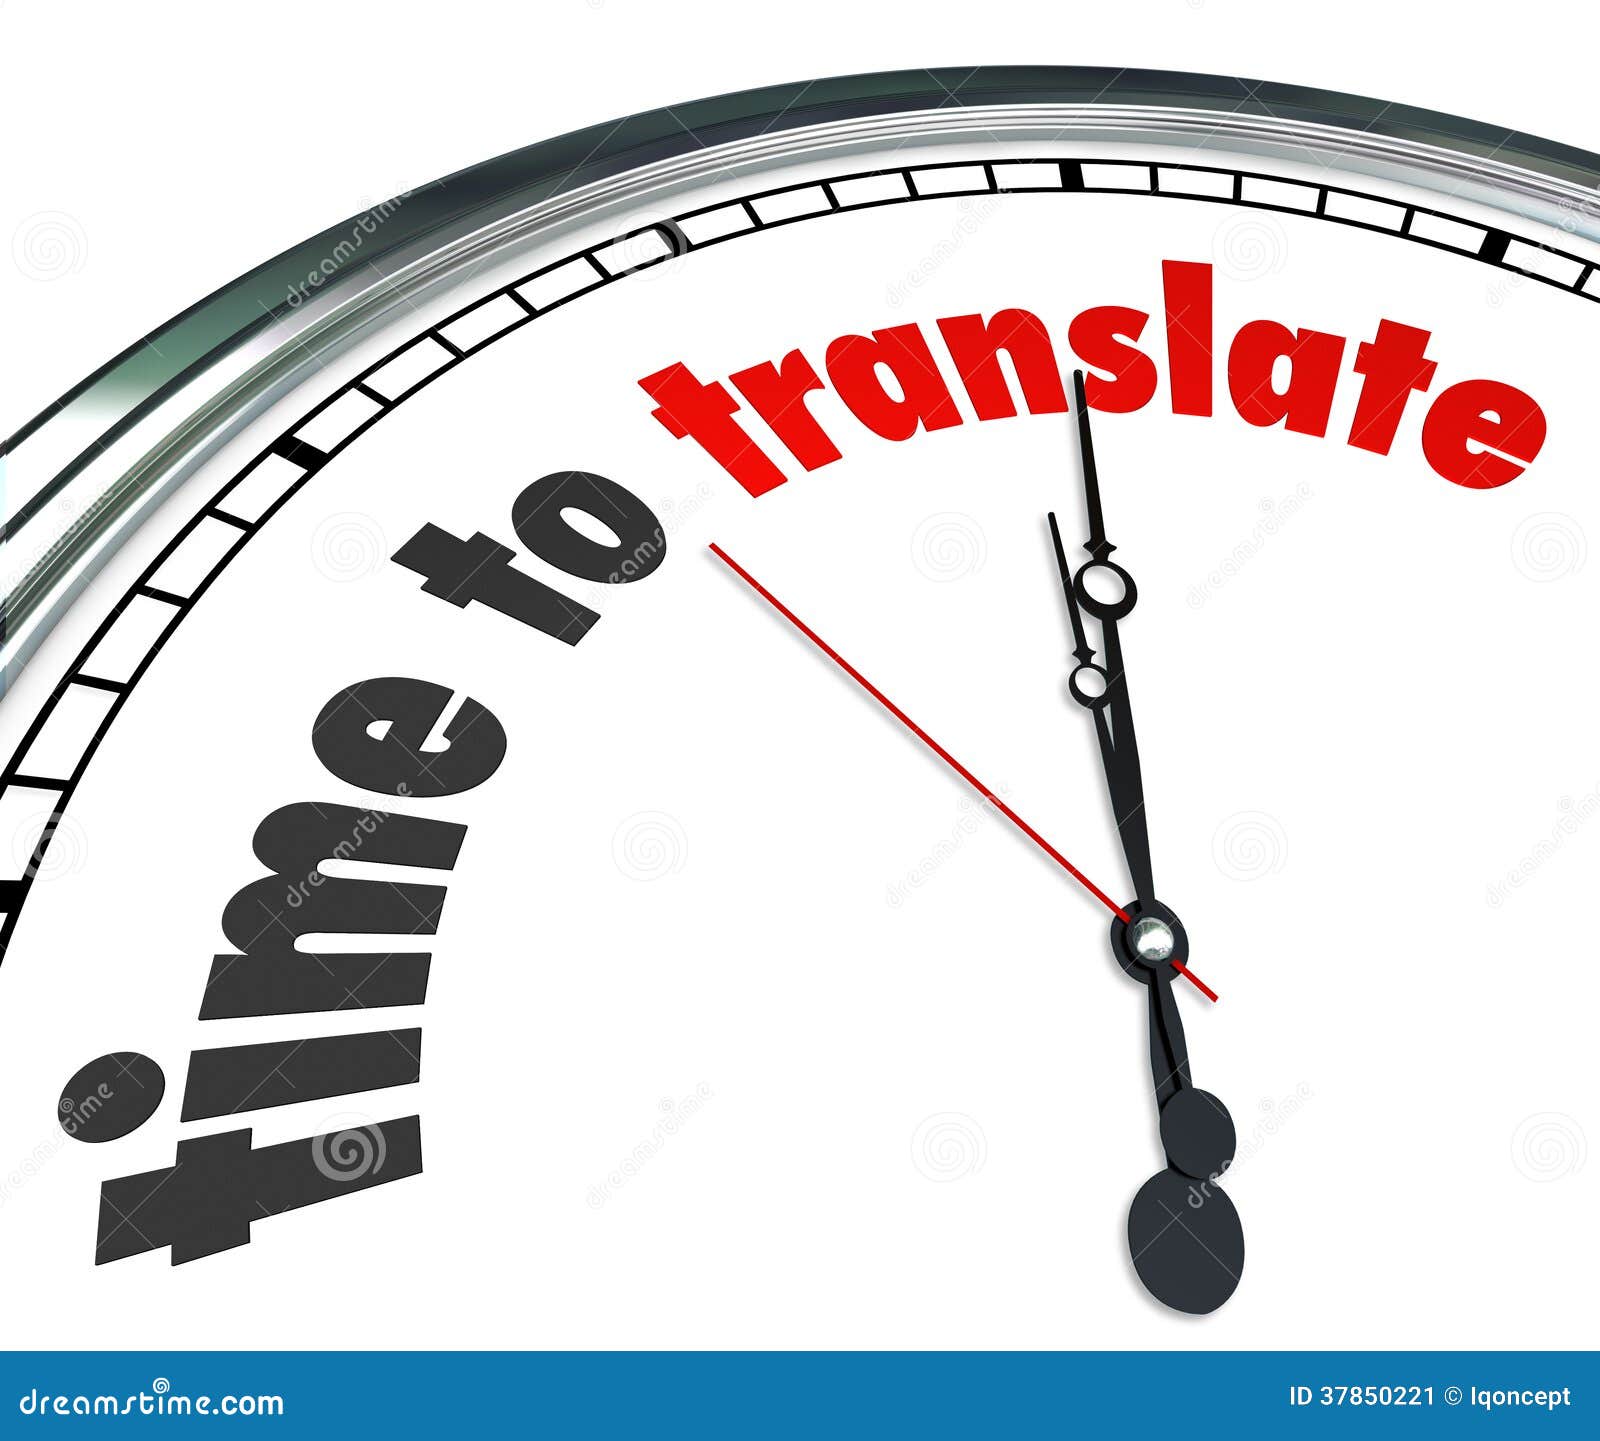 traducir journey time